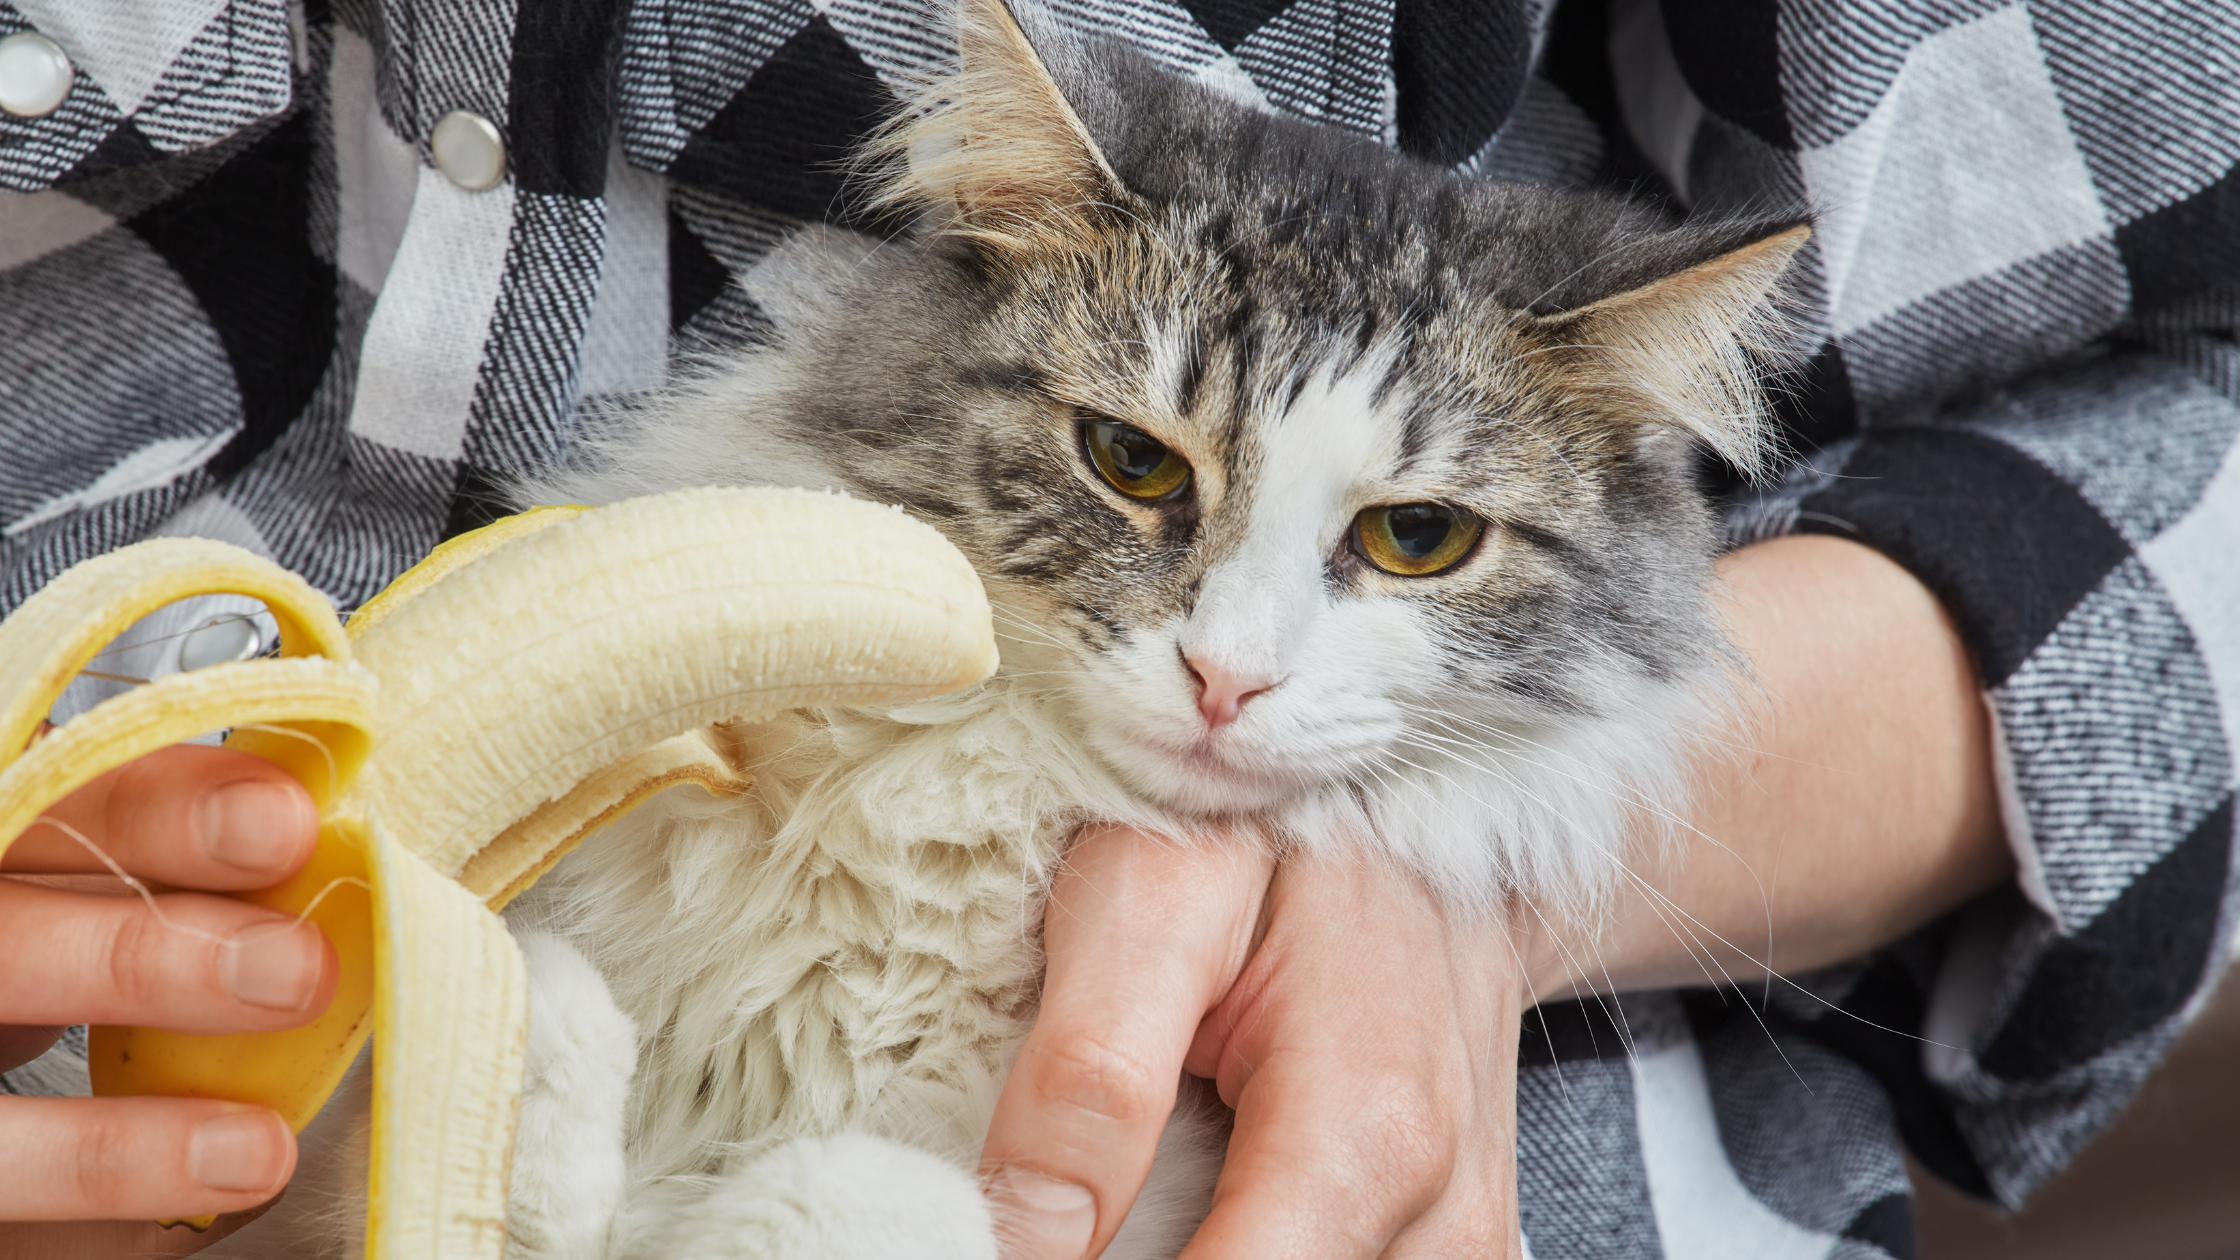 Can cats eat bananas